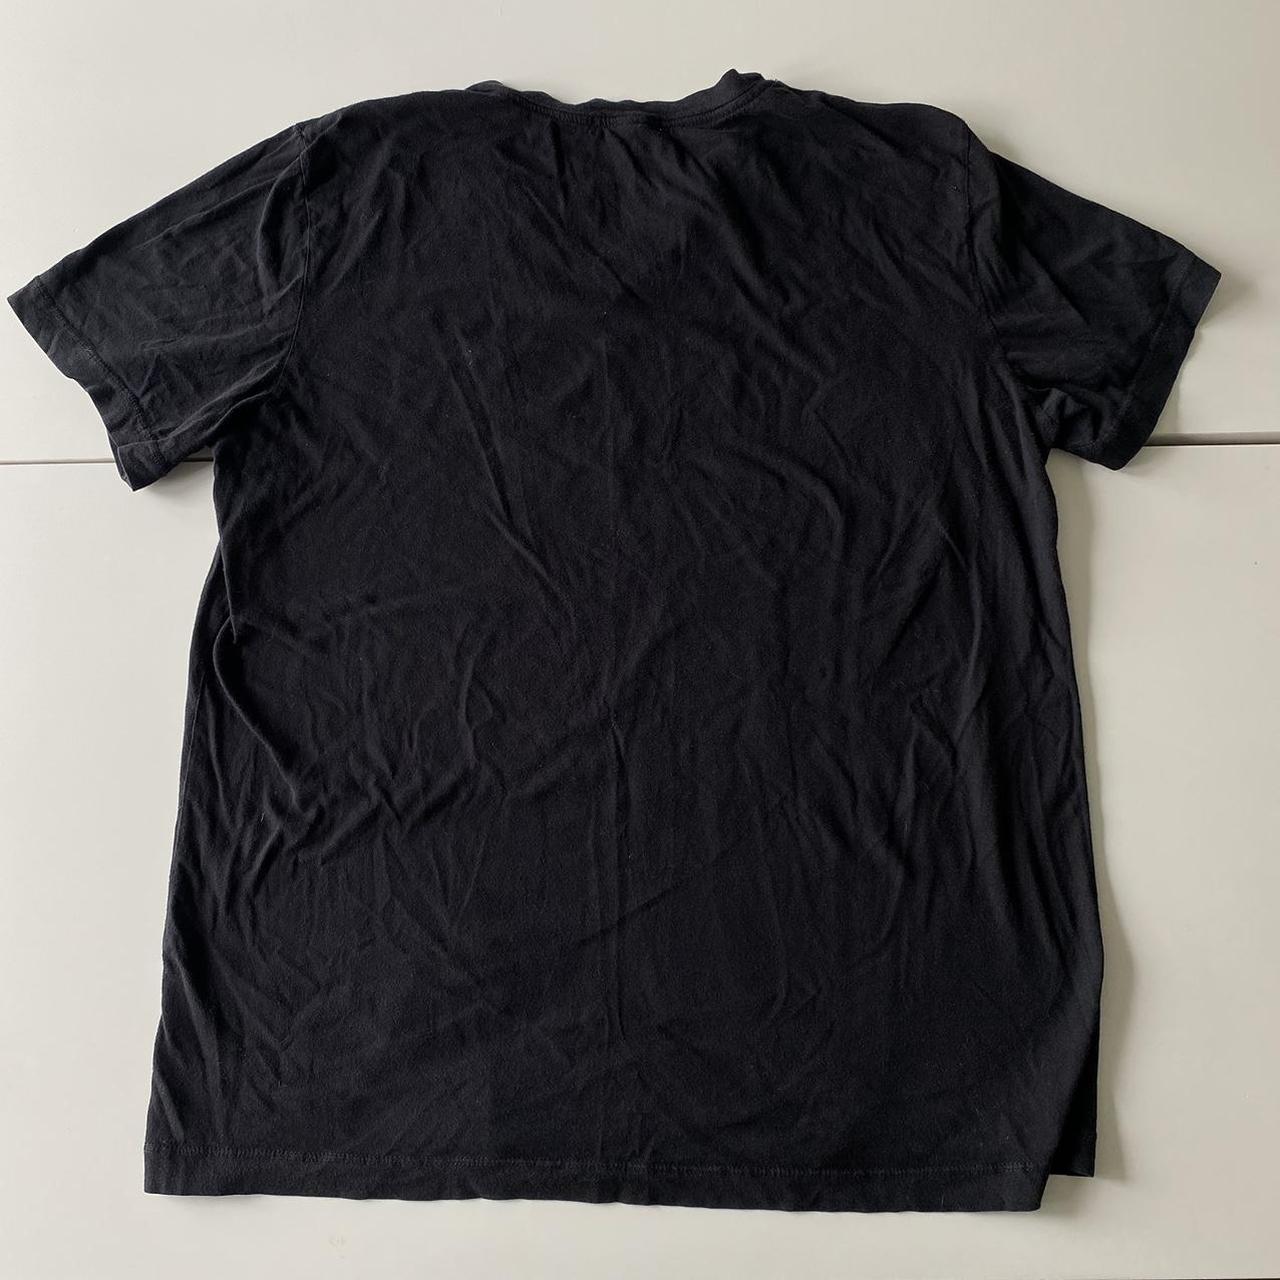 James Perse Women's Black T-shirt (3)